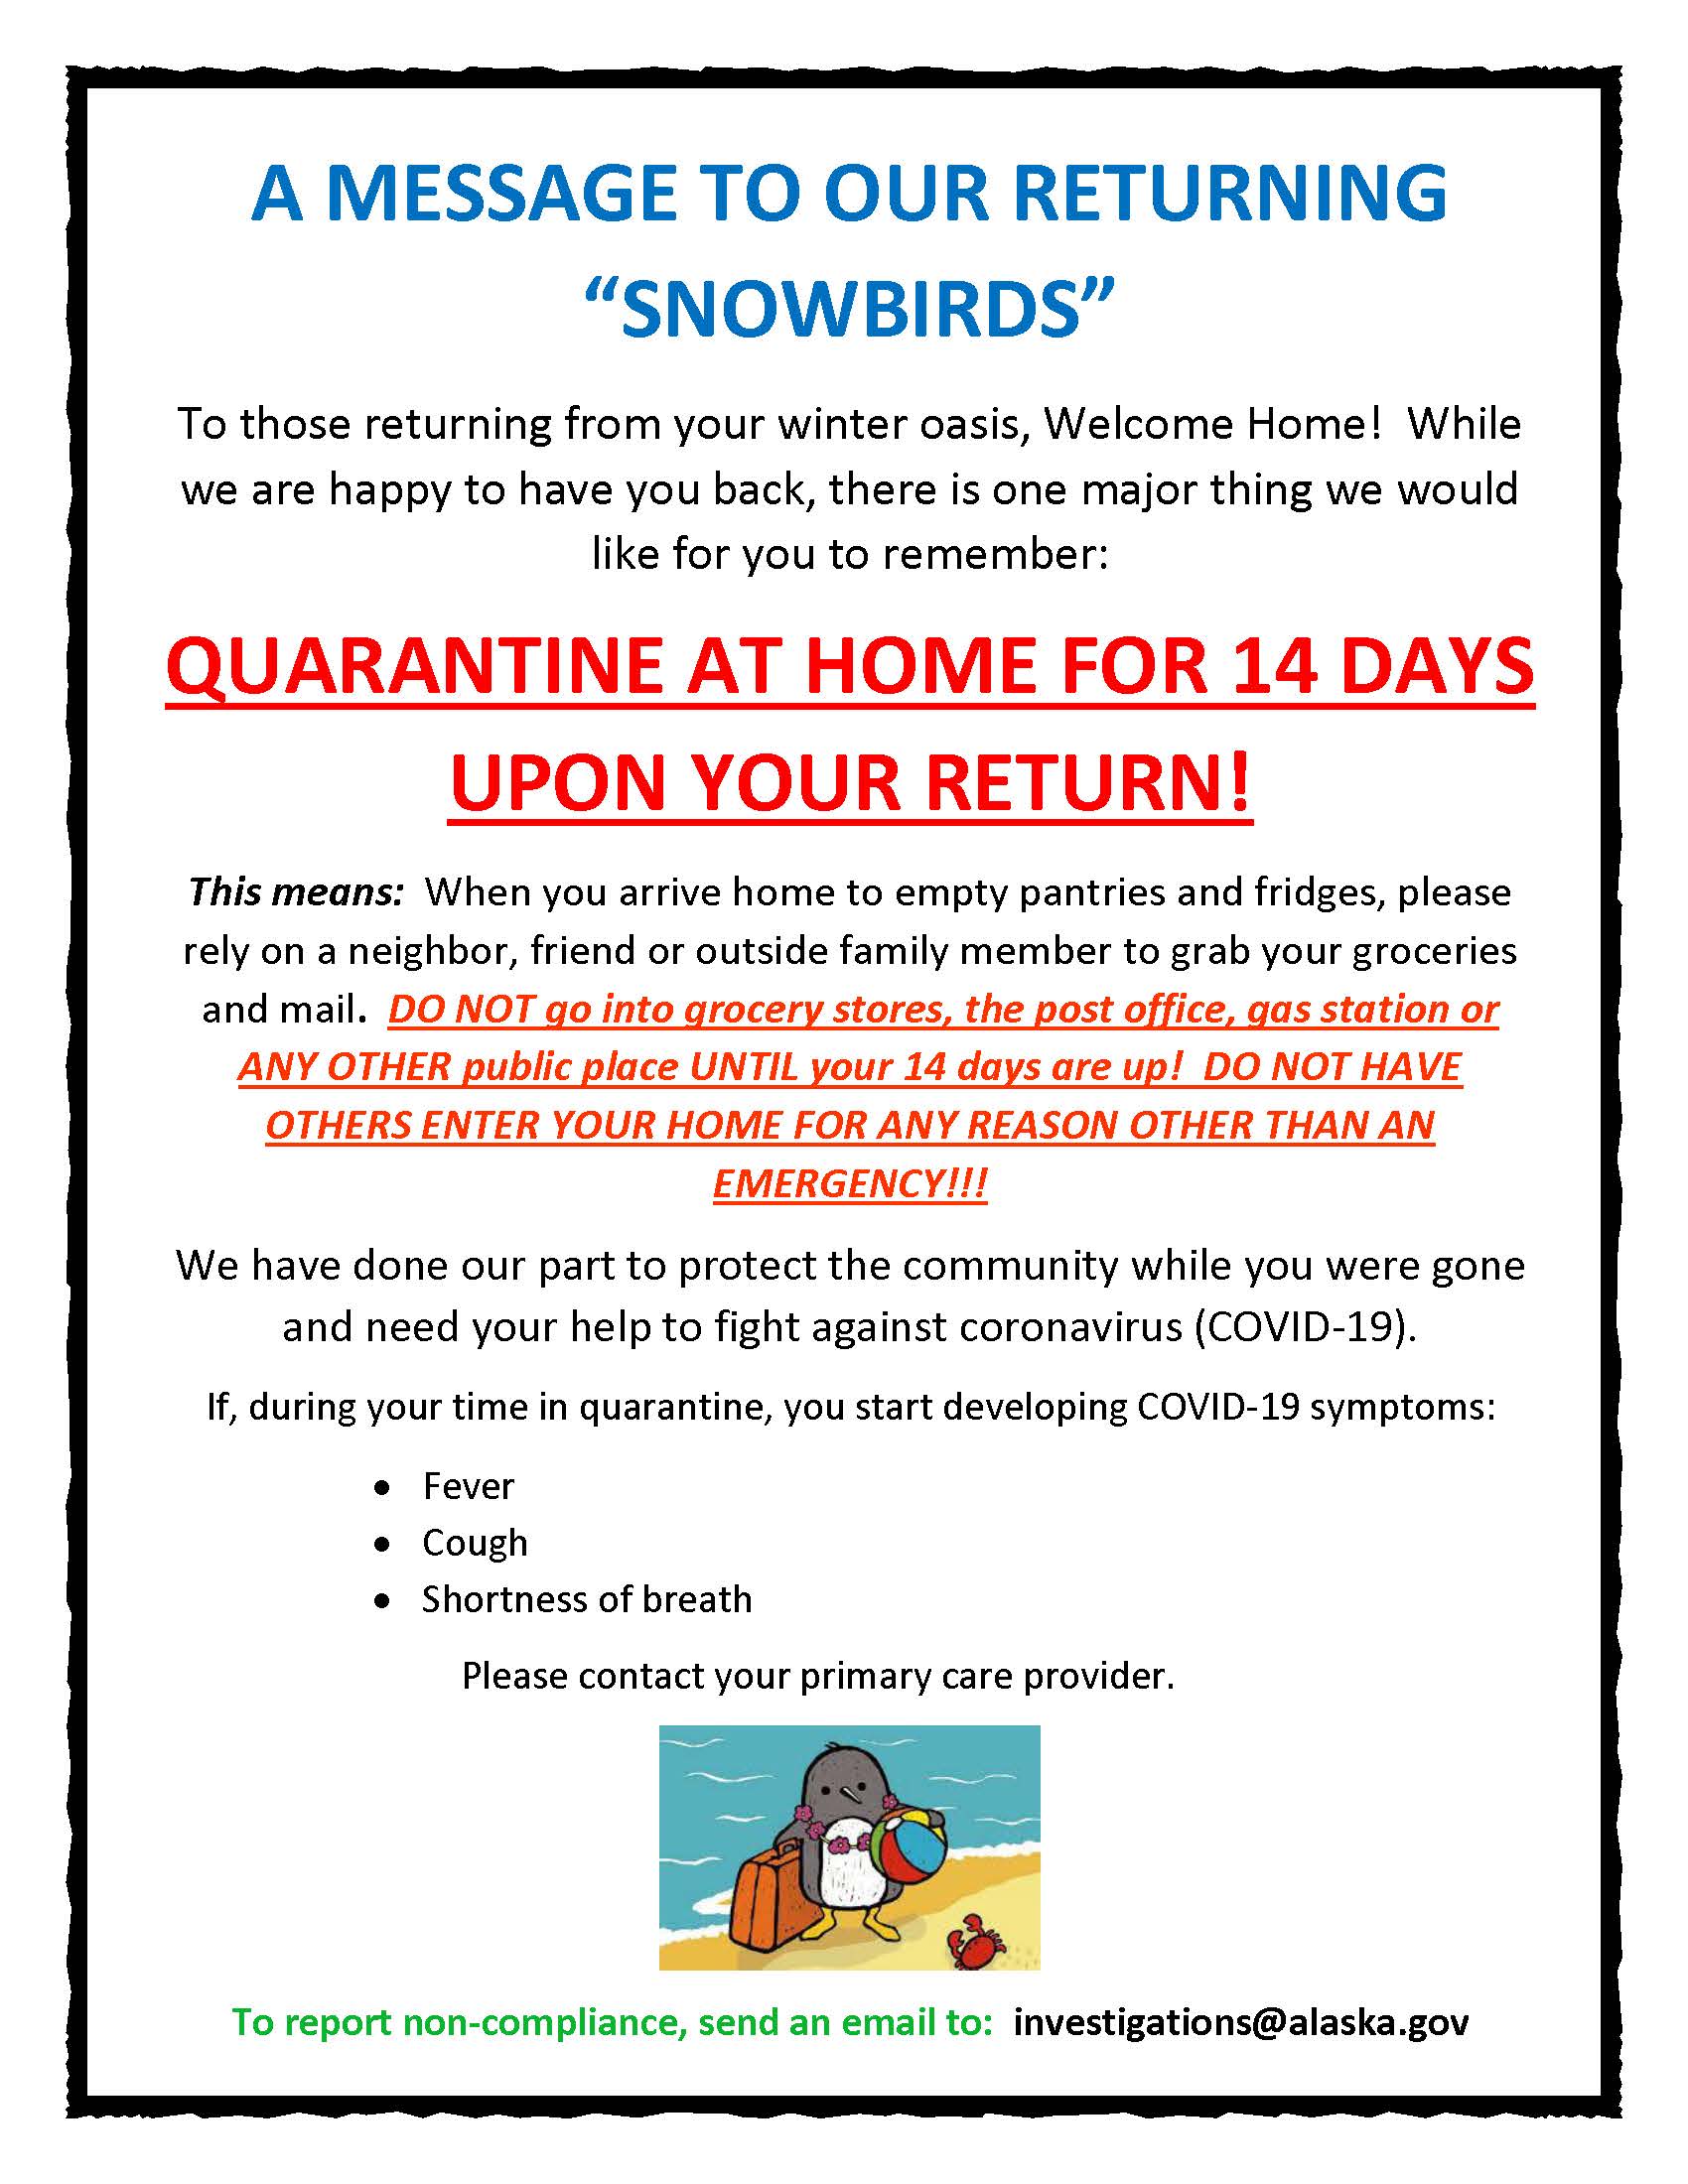 A MESSAGE TO RETURNING SNOWBIRDS